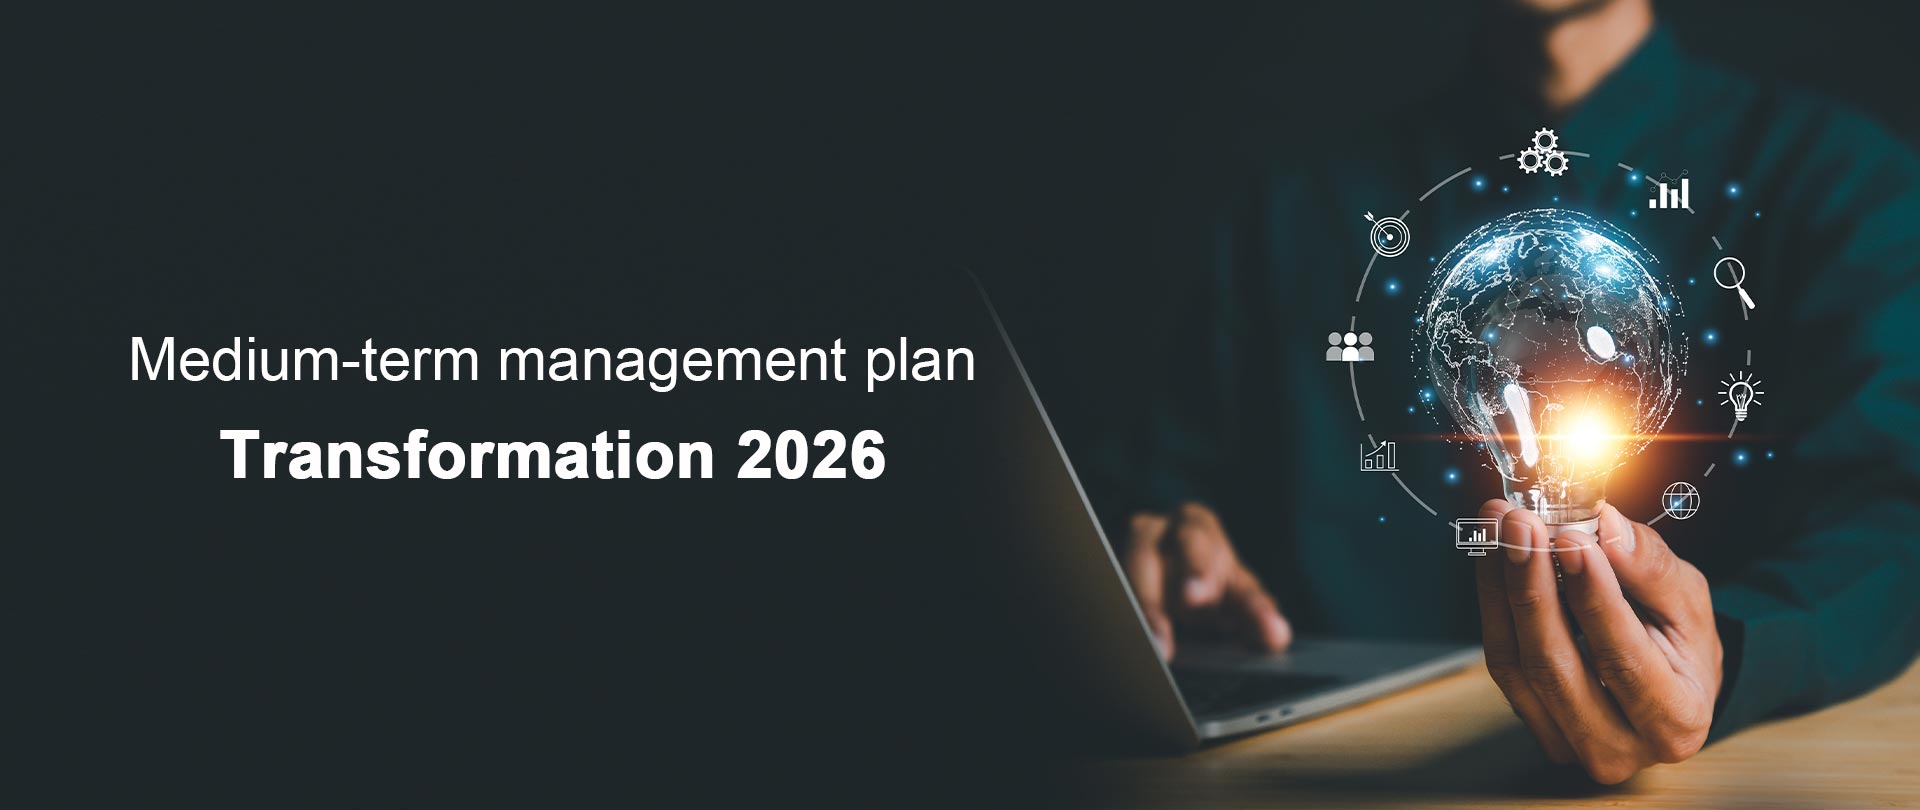 Medium-term management plan Transformation 2026